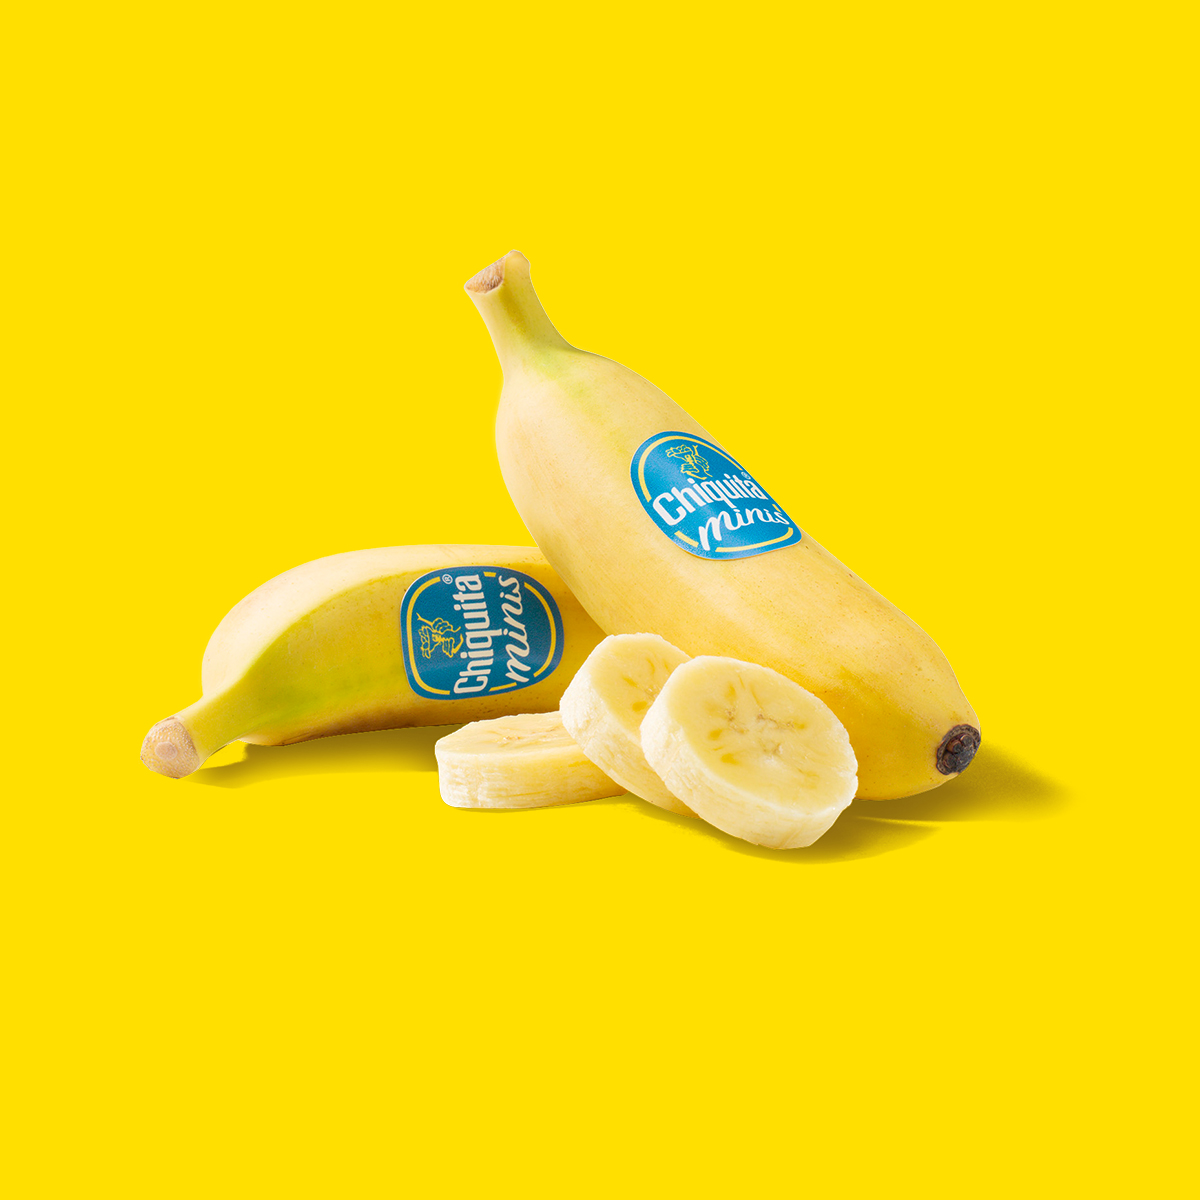 Chiquita Minis Bananas, Tiny, tangy, and tasty